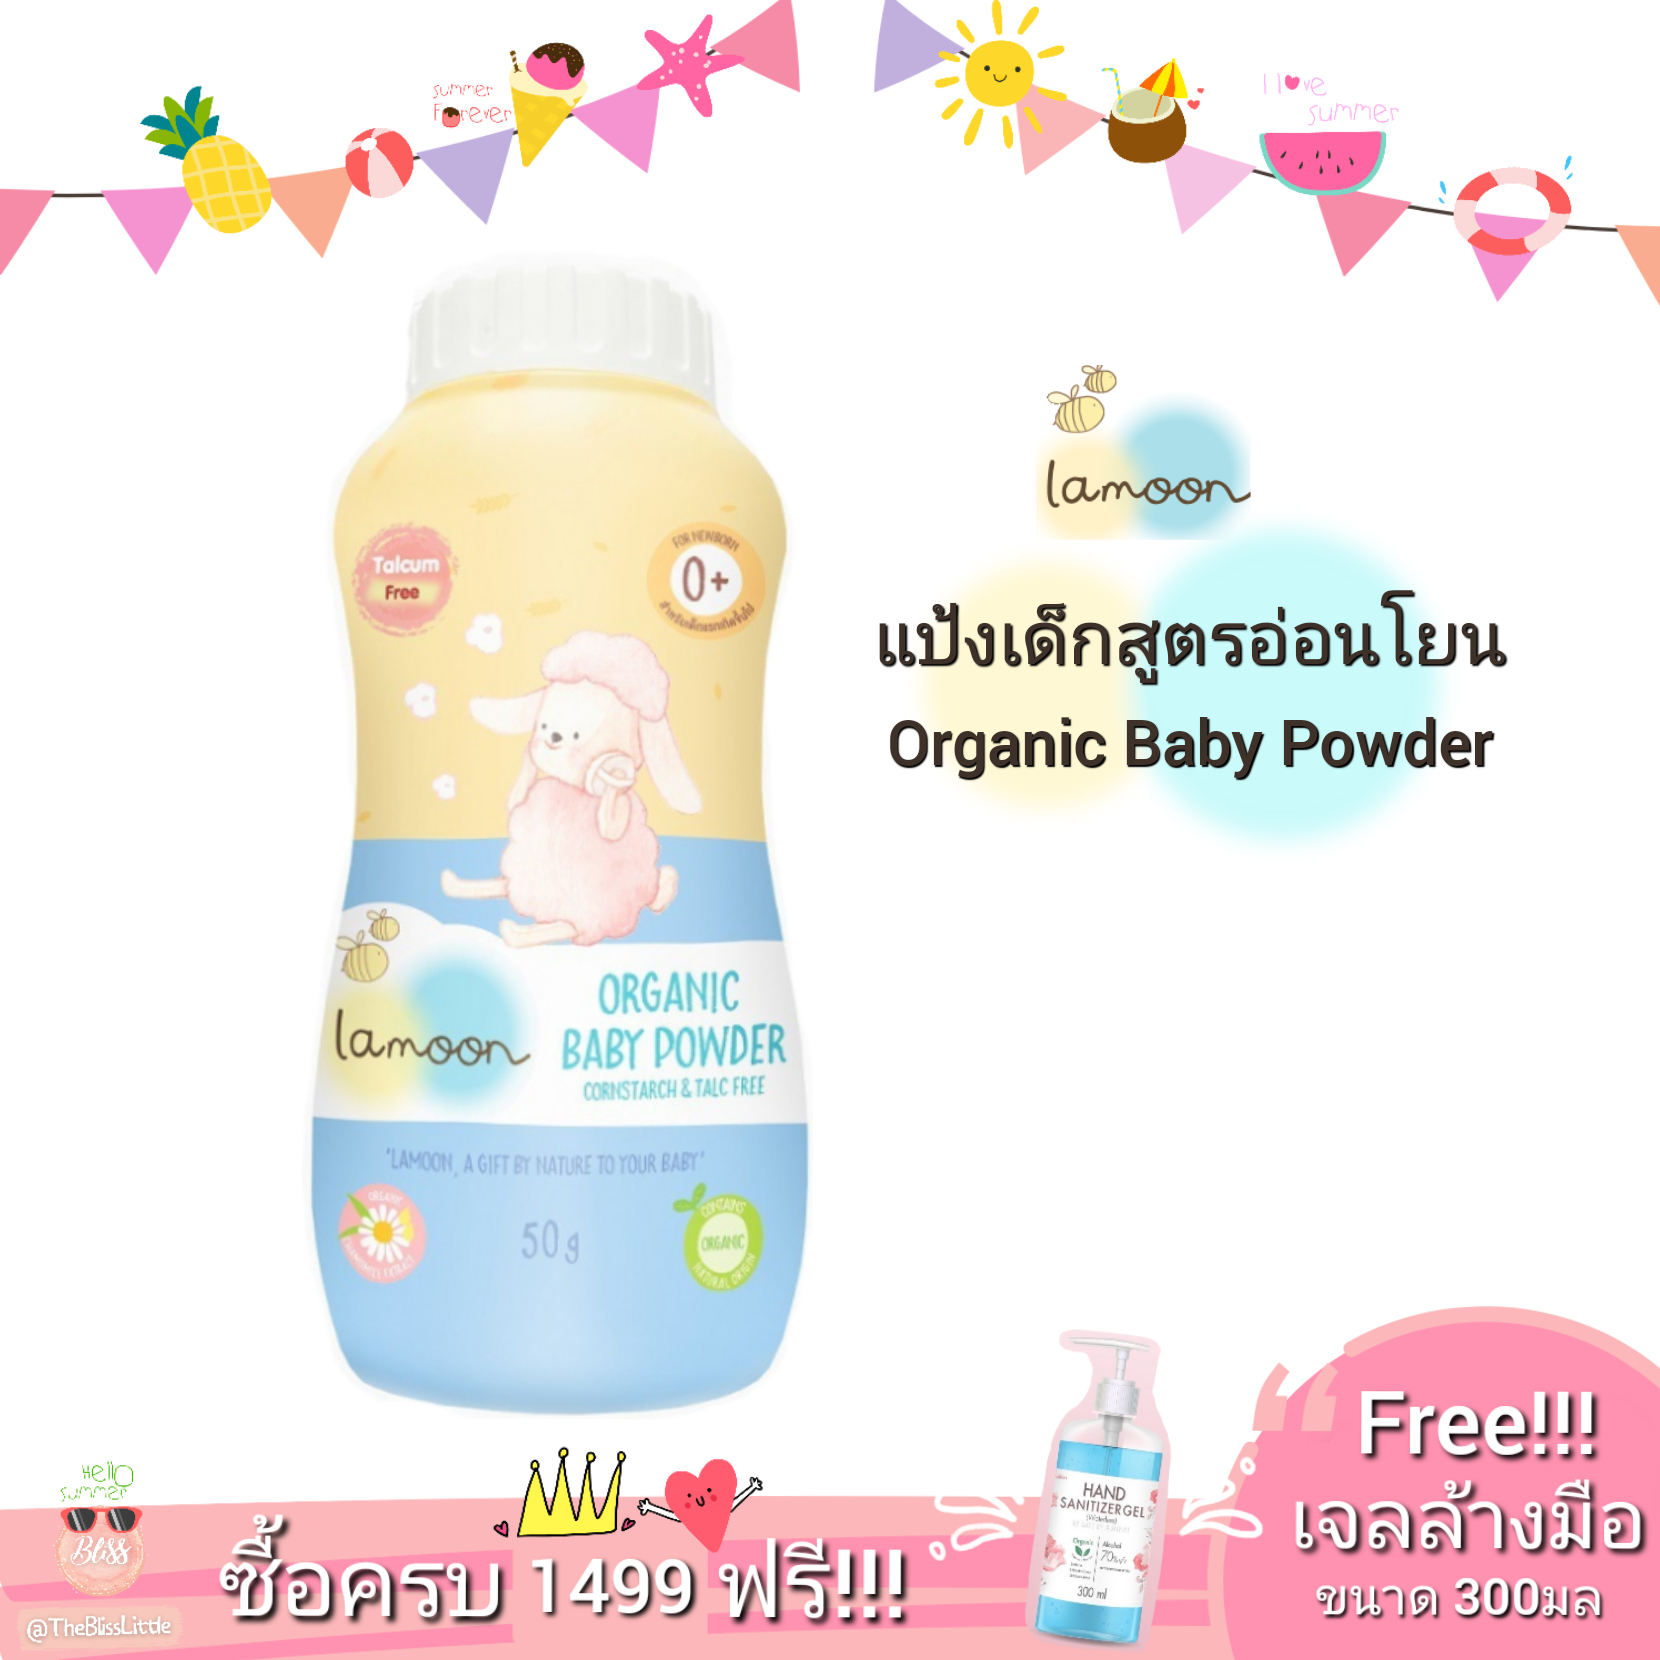 Lamoon Organic Baby Powder ละมุน แป้งเด็ก ออร์แกนิค ขนาด 50 กรัม